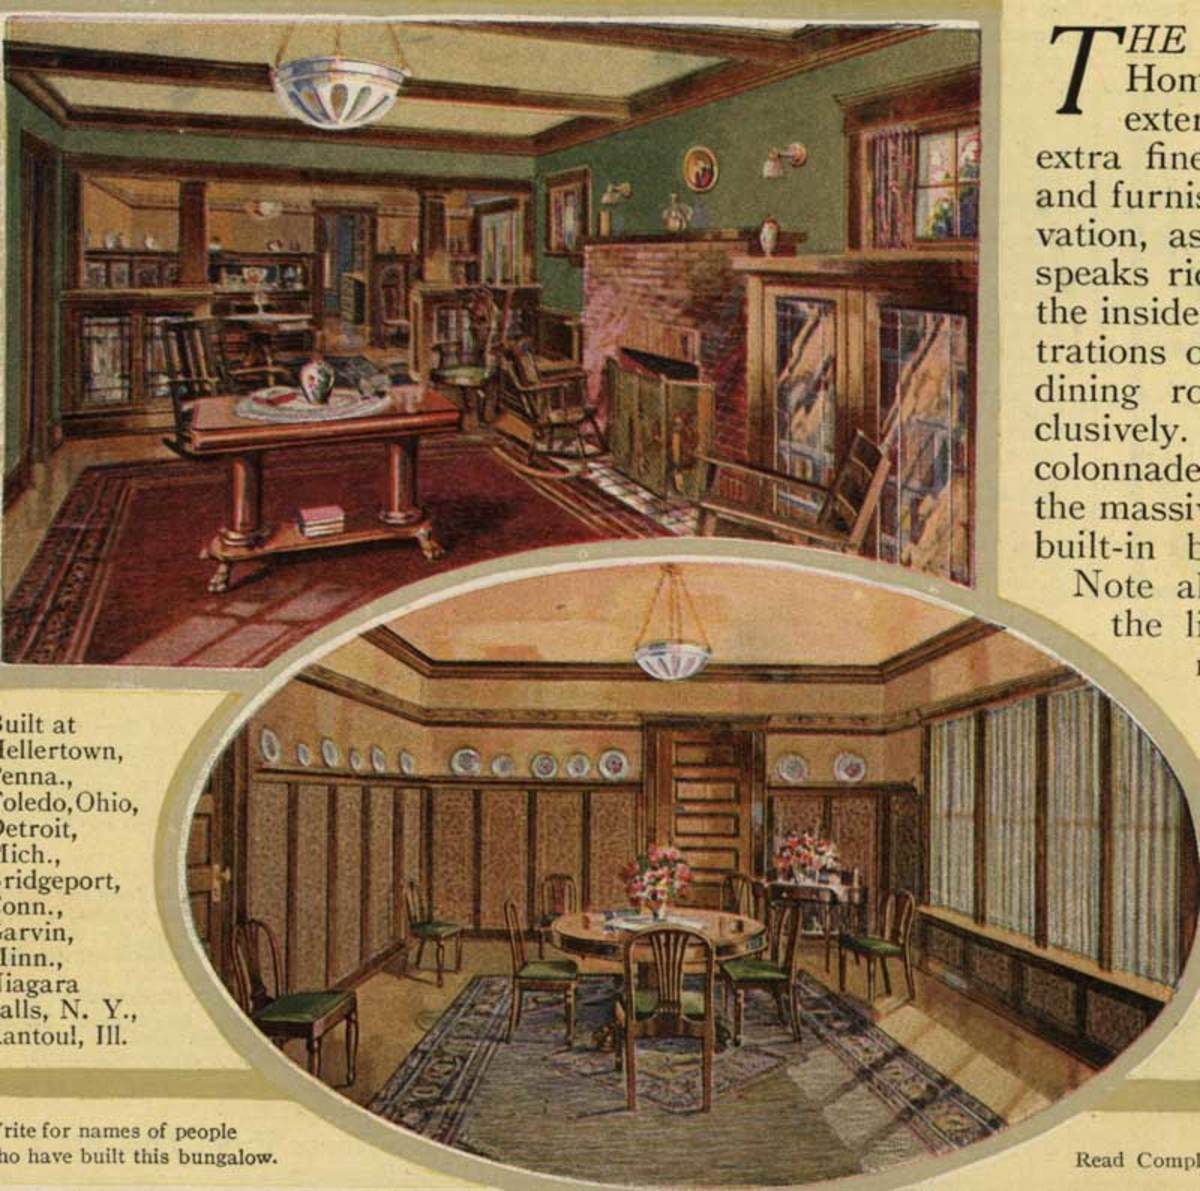 A Sears Honor-Bilt interior, circa 1921.